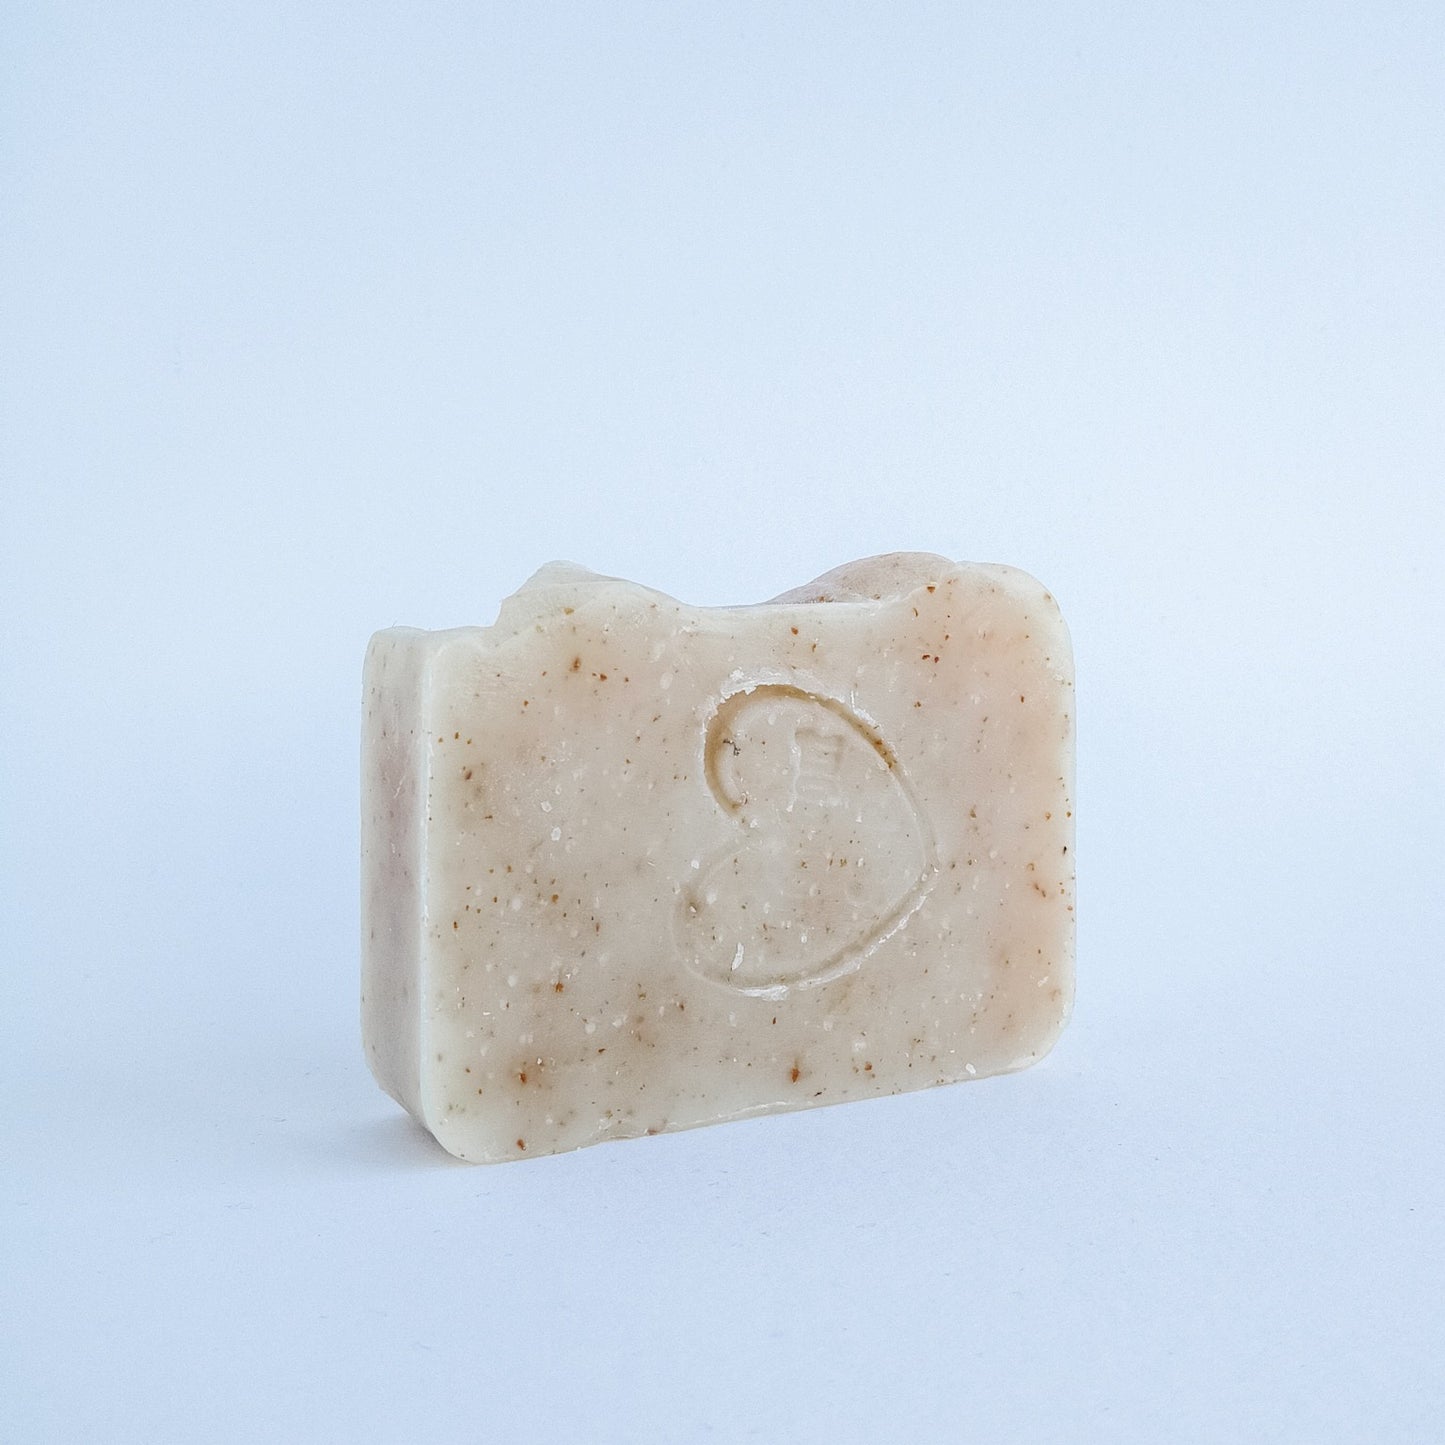 Handmade Soap from Ireland's Garden